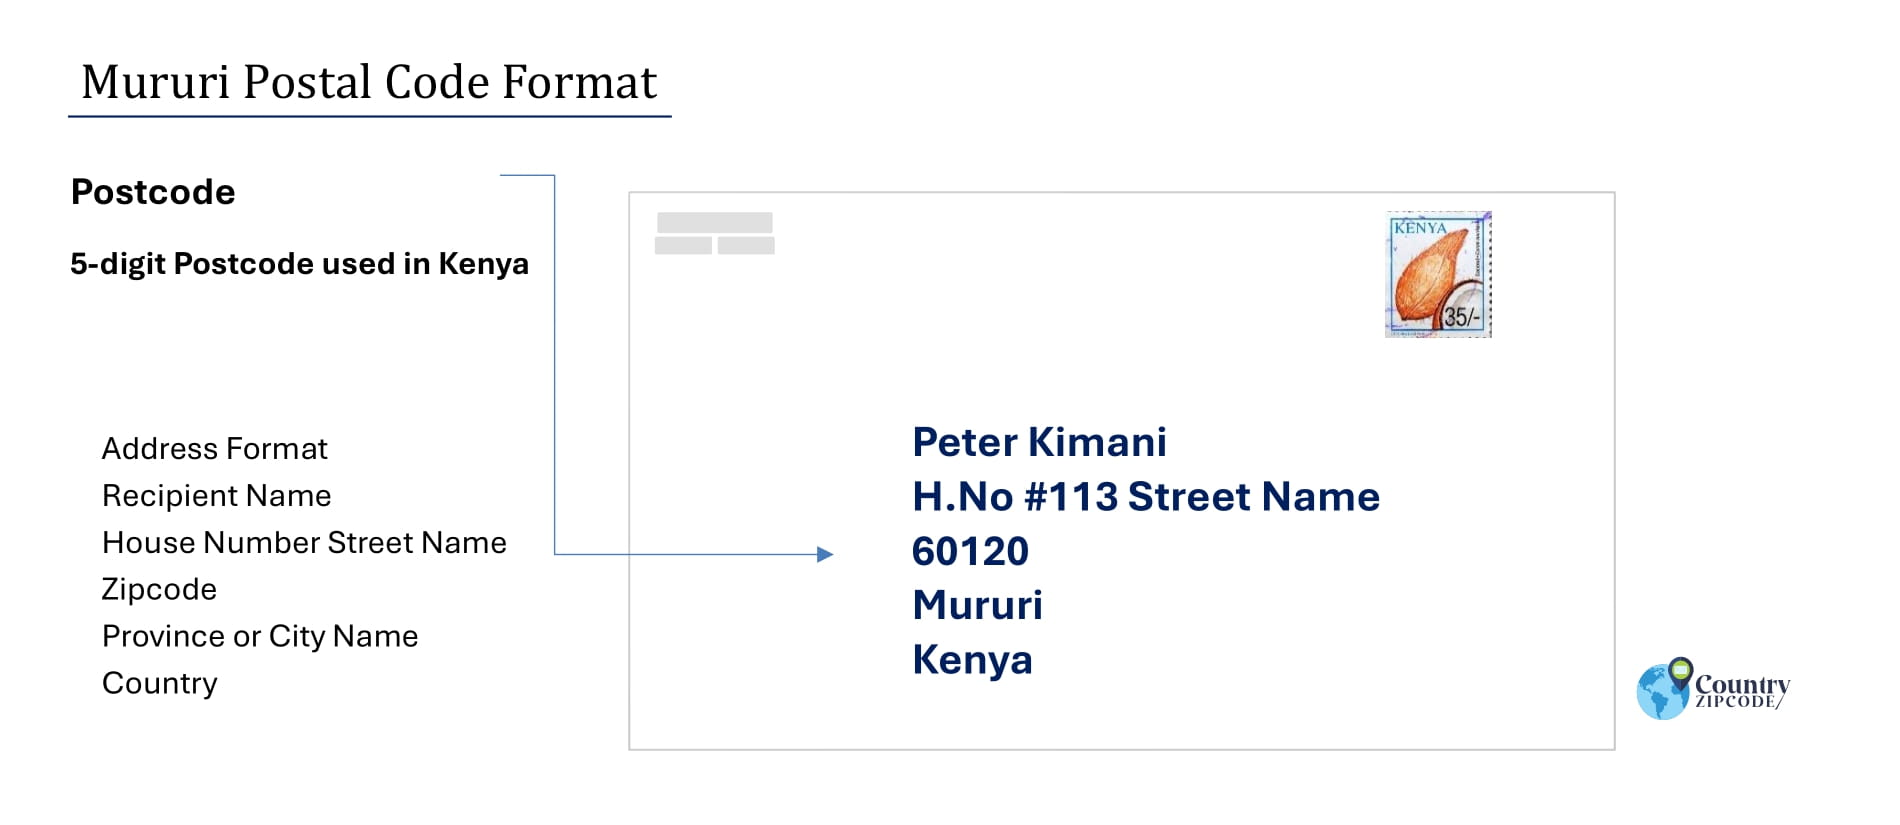 Example of Mururi Address and postal code format